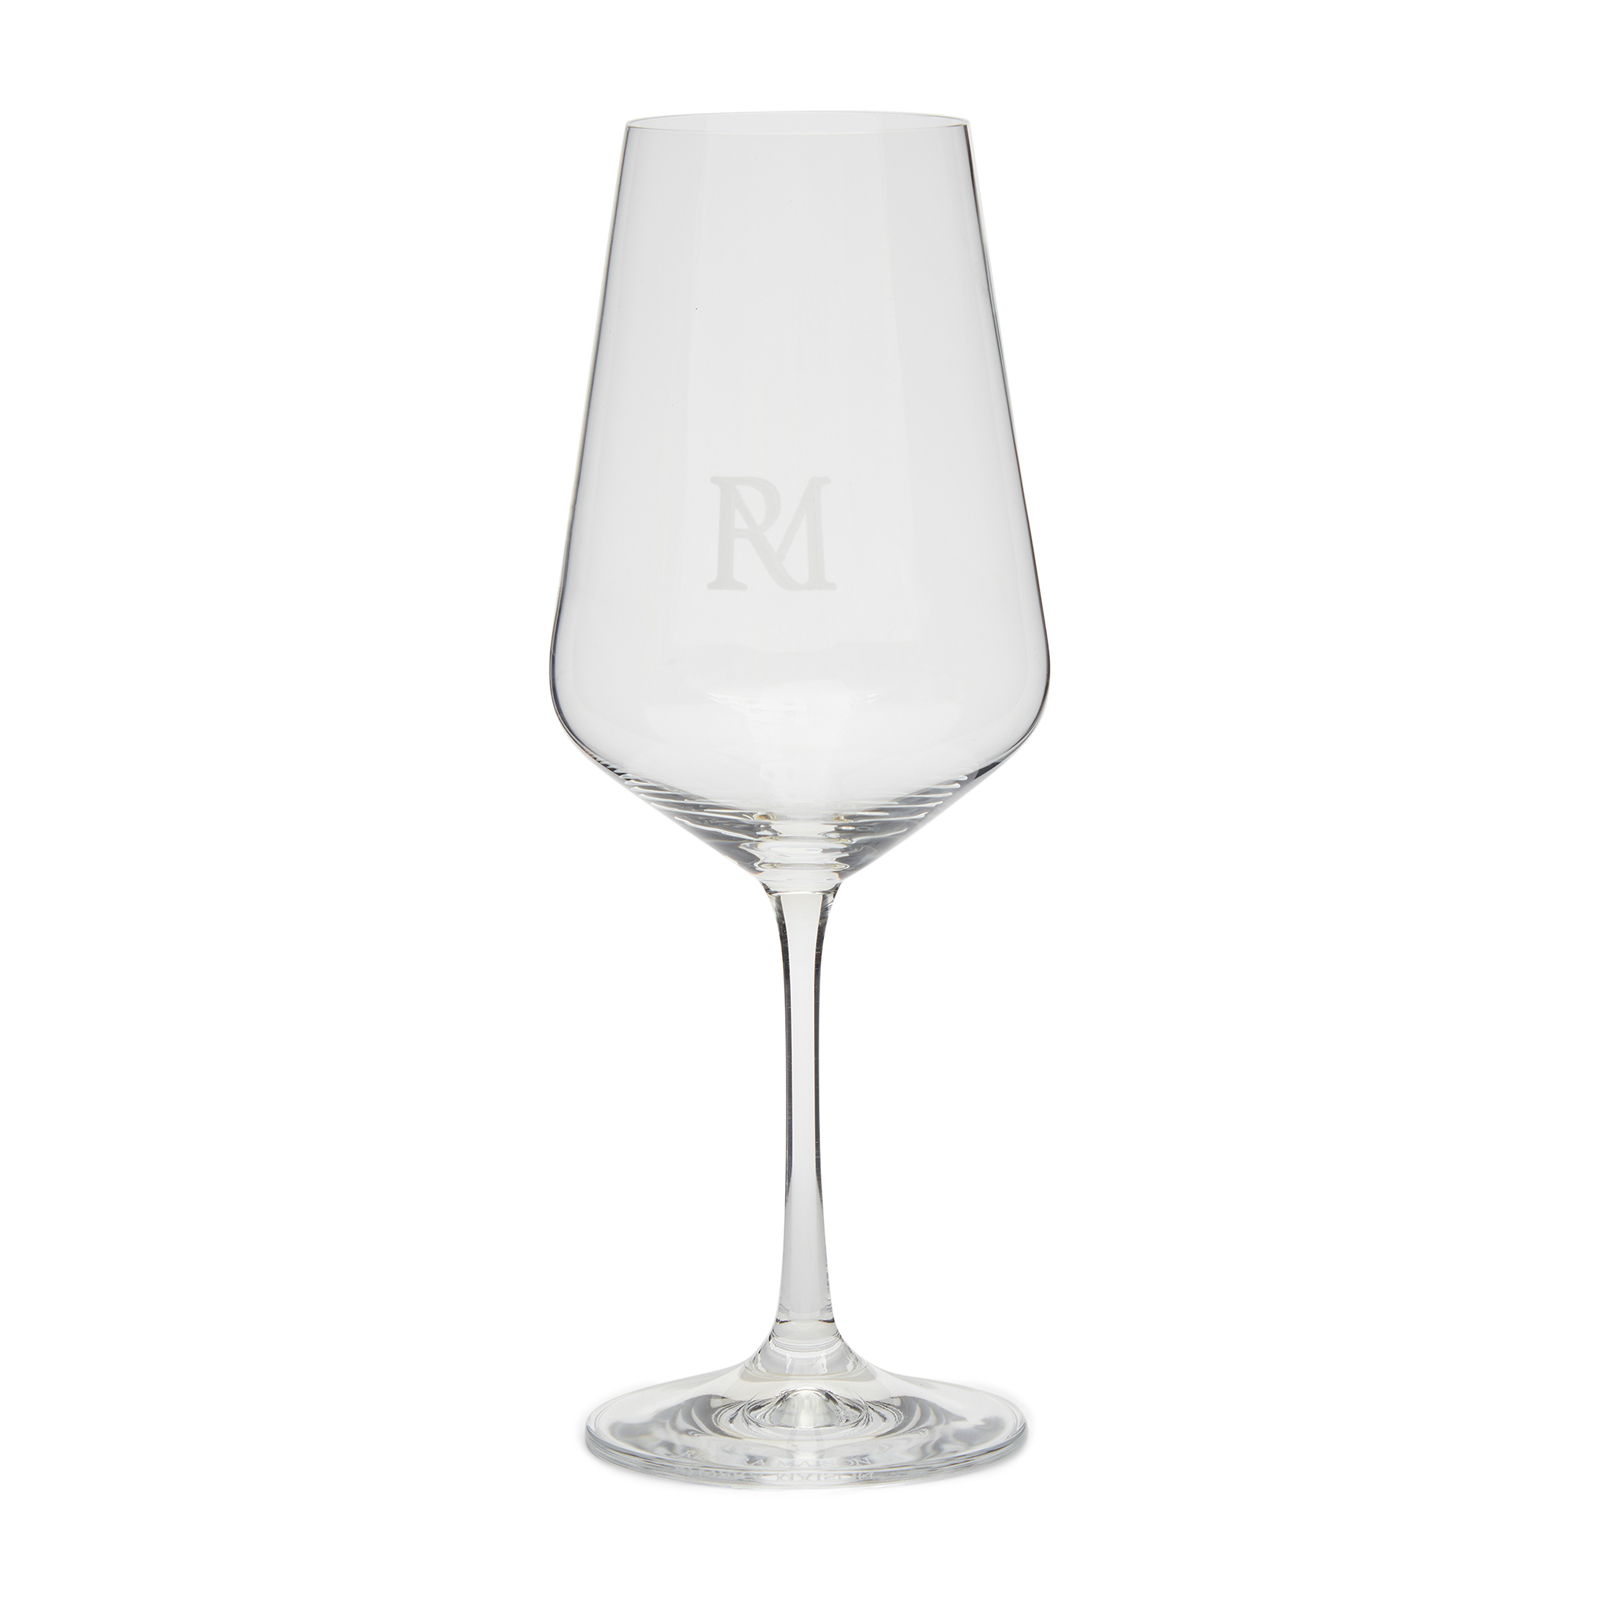 RM Monogram White Wine Glass